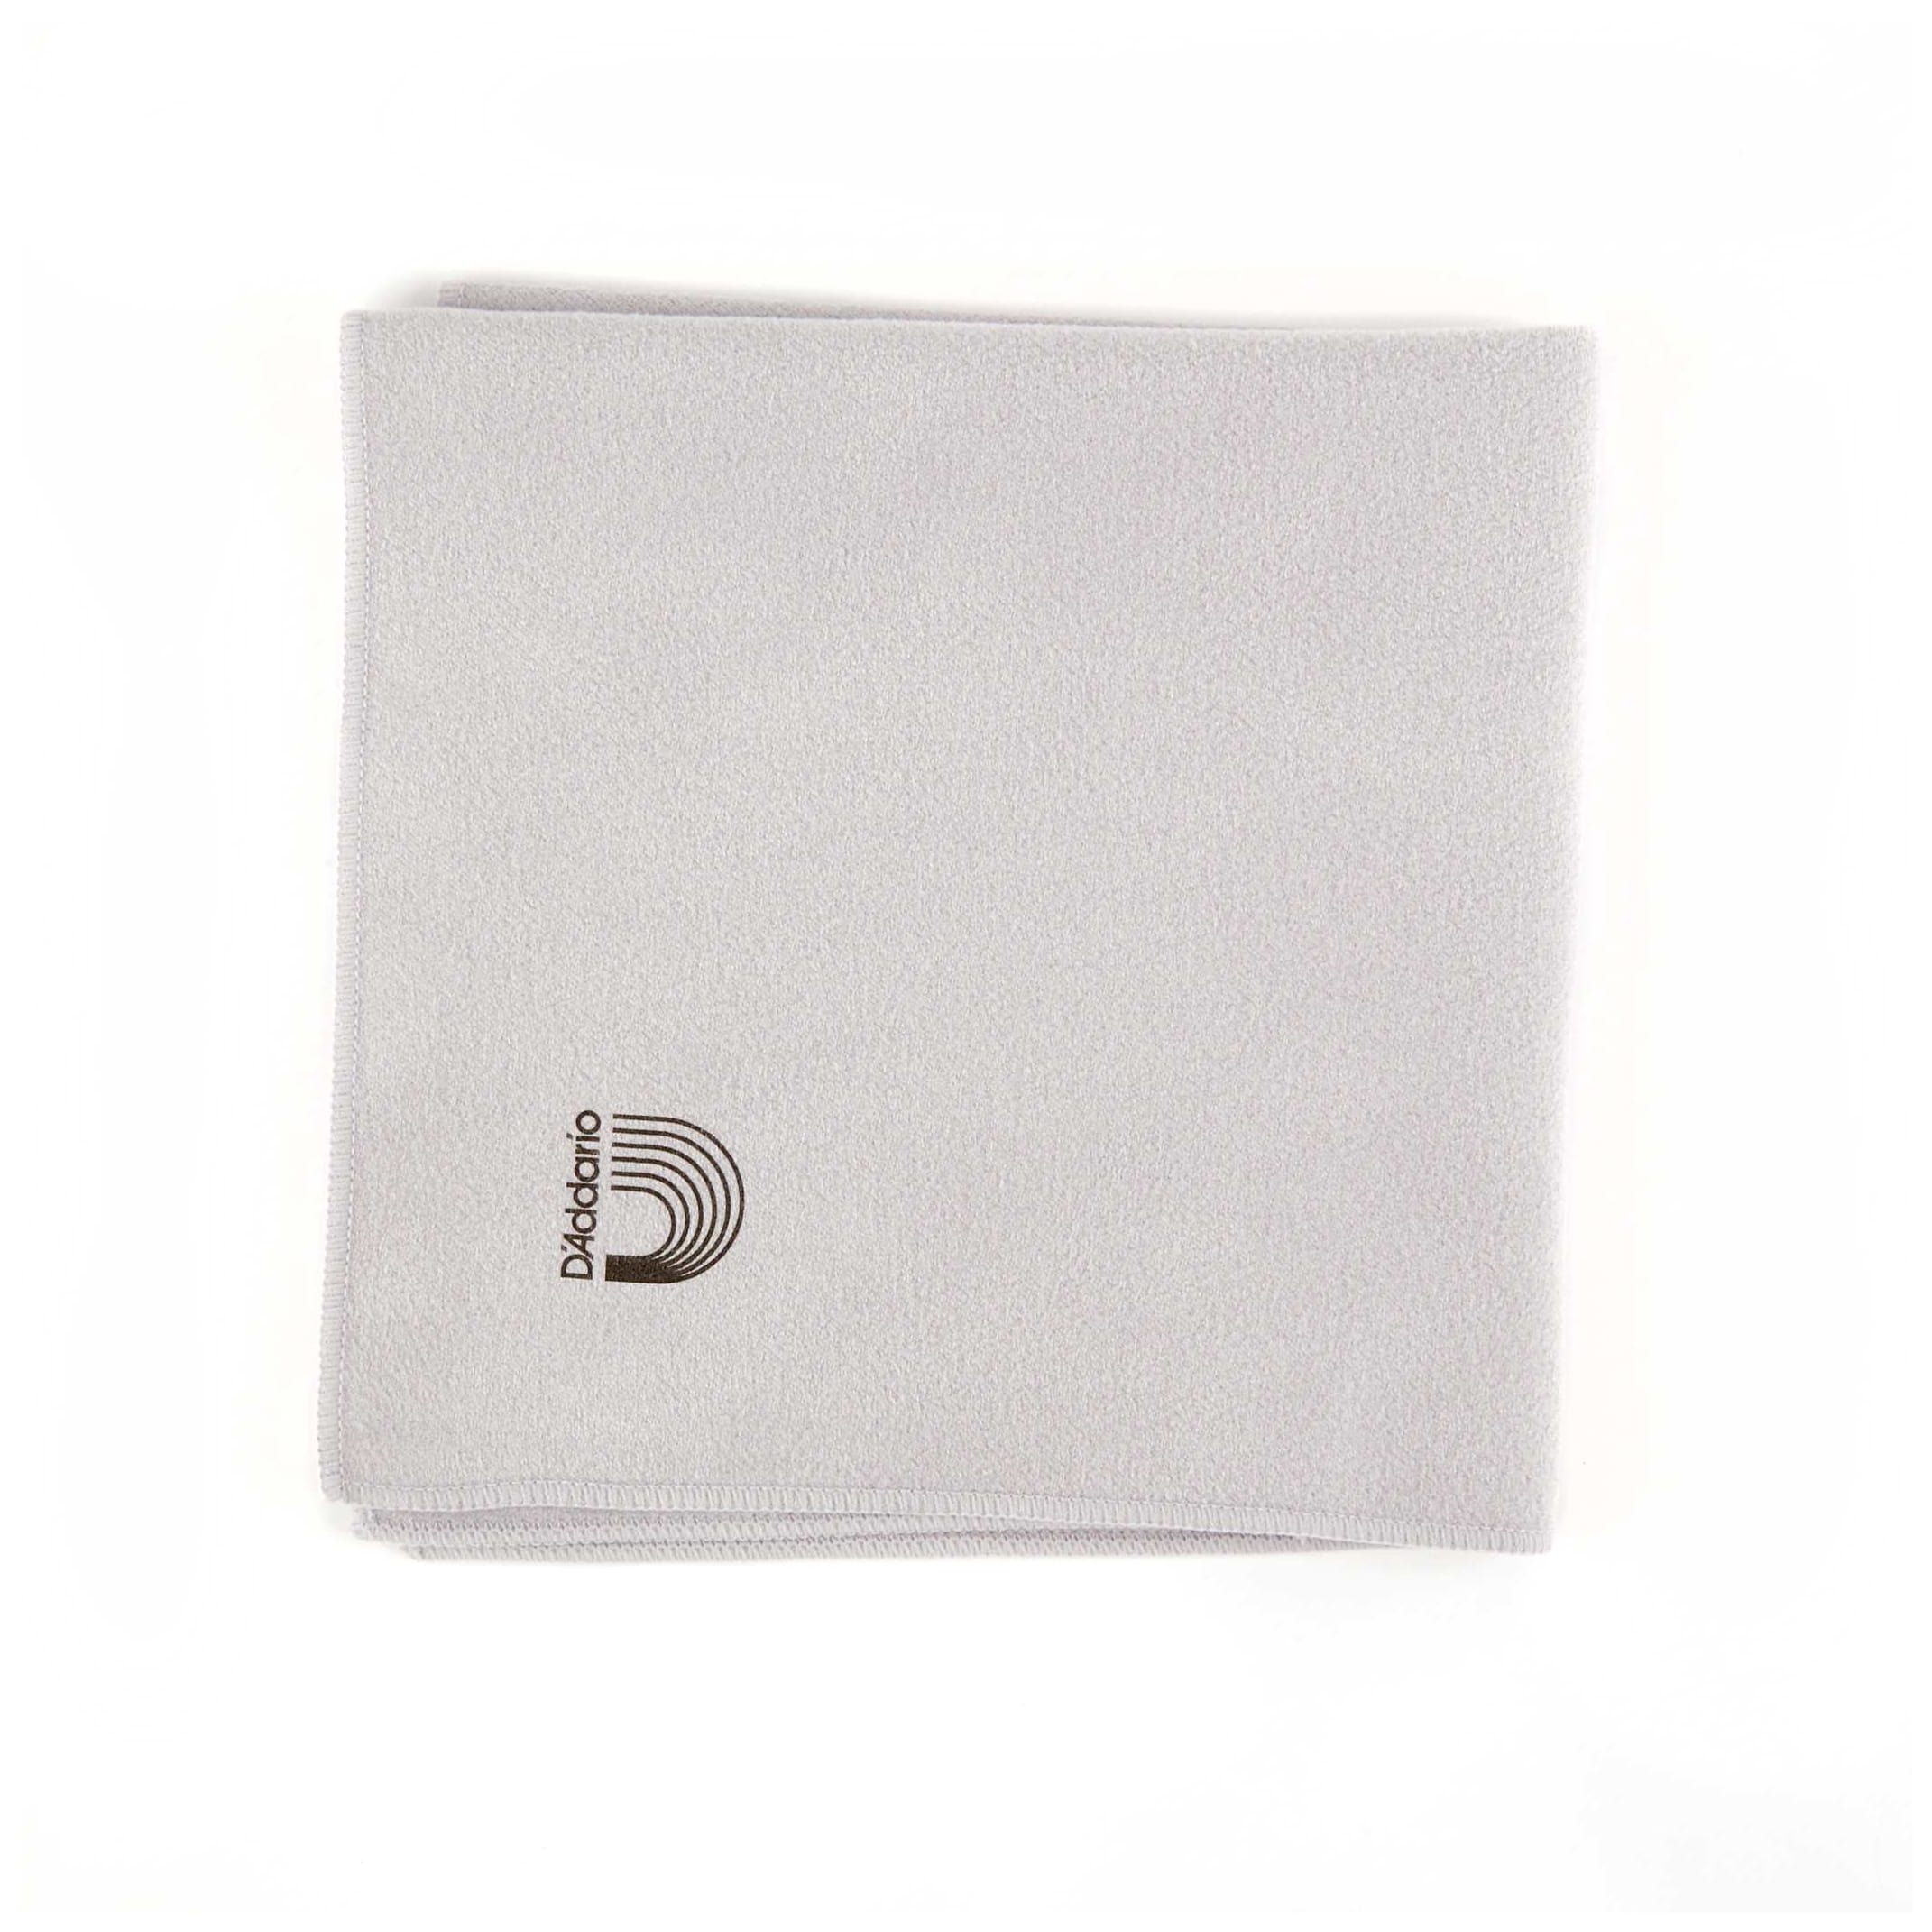 D’Addario PW-MPC - Microfiber Polish Cloth